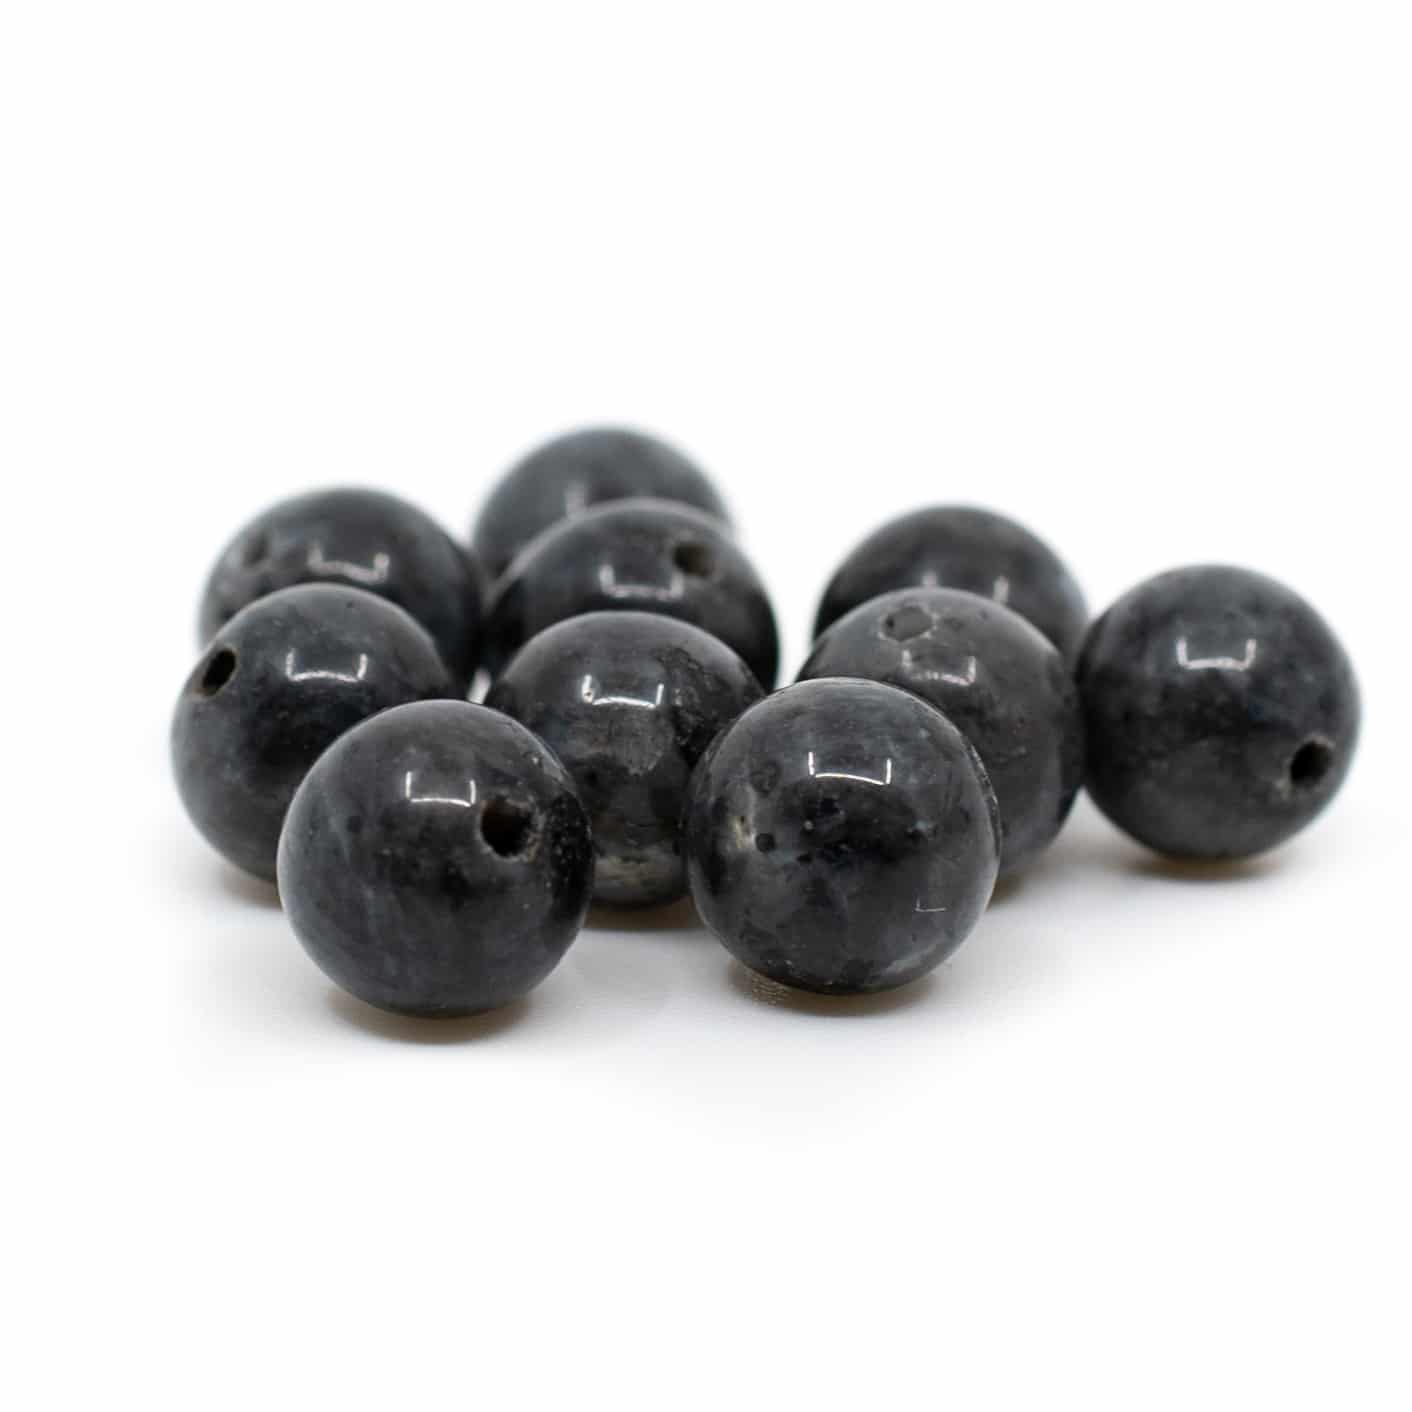 Gemstone Loose Labradorite Beads - 10 pieces (8 mm)